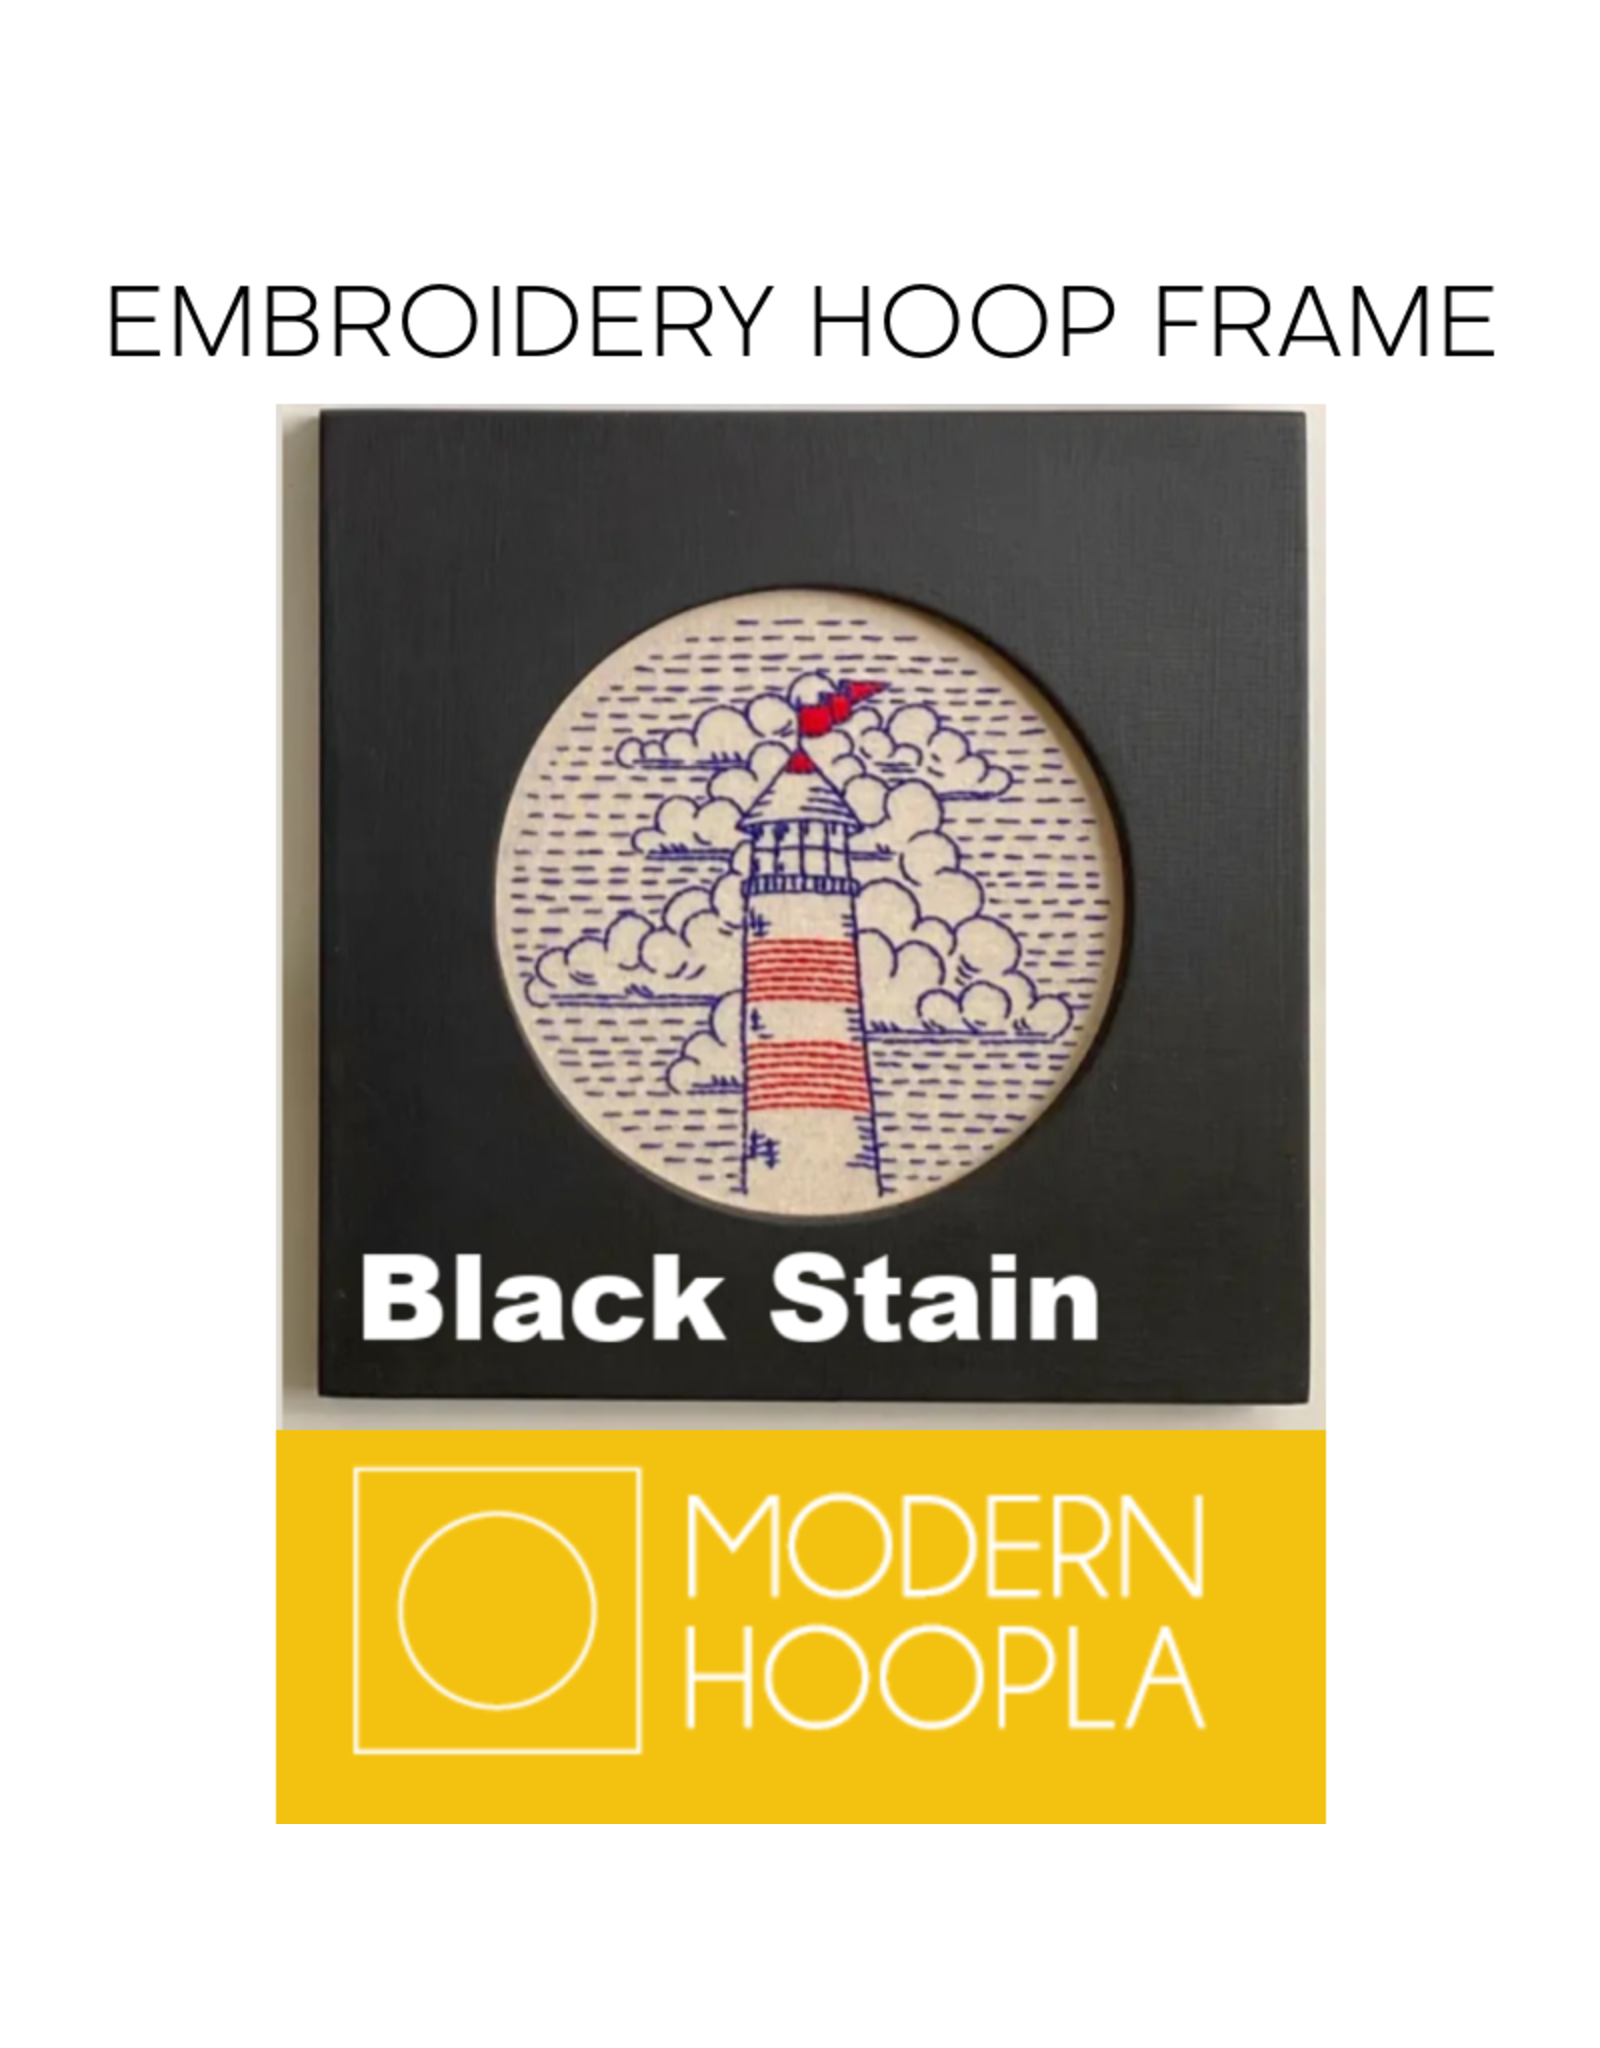 Modern Hoopla Square Hoop Frame in Black Stain for 6" Embroidery Hoop